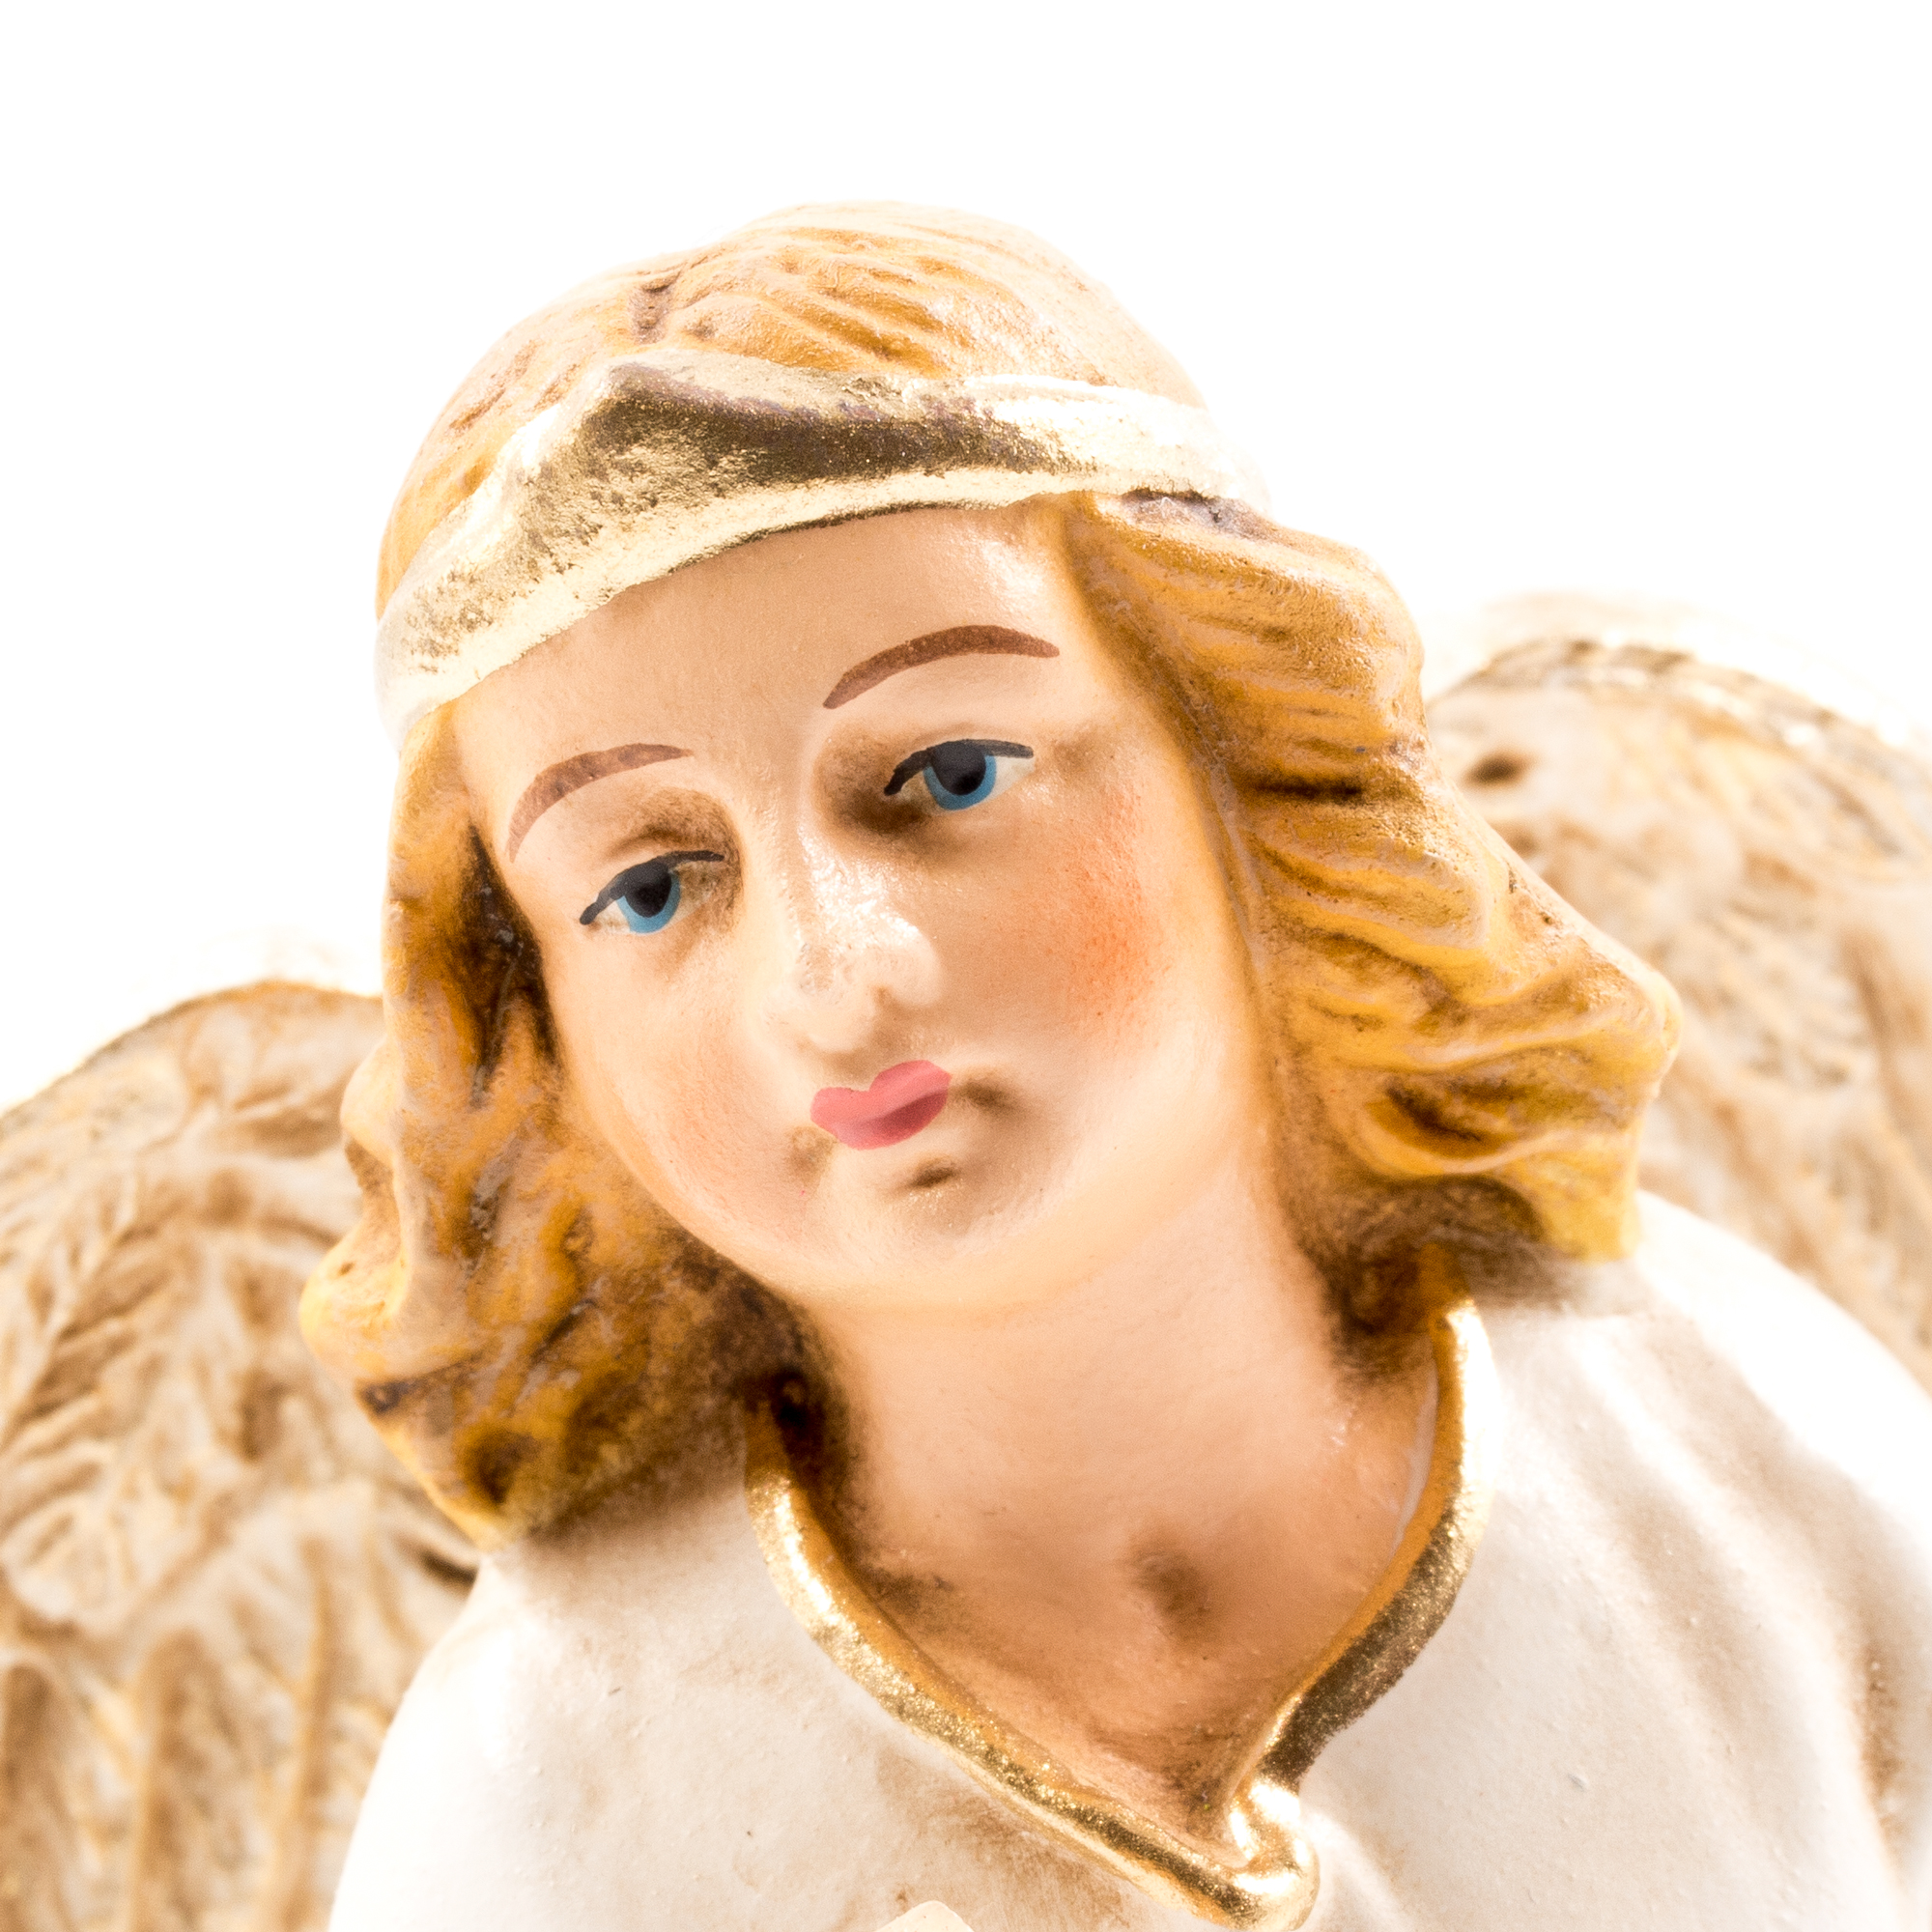 Proclaiming angel - Marolin Nativity figure - made in Germany